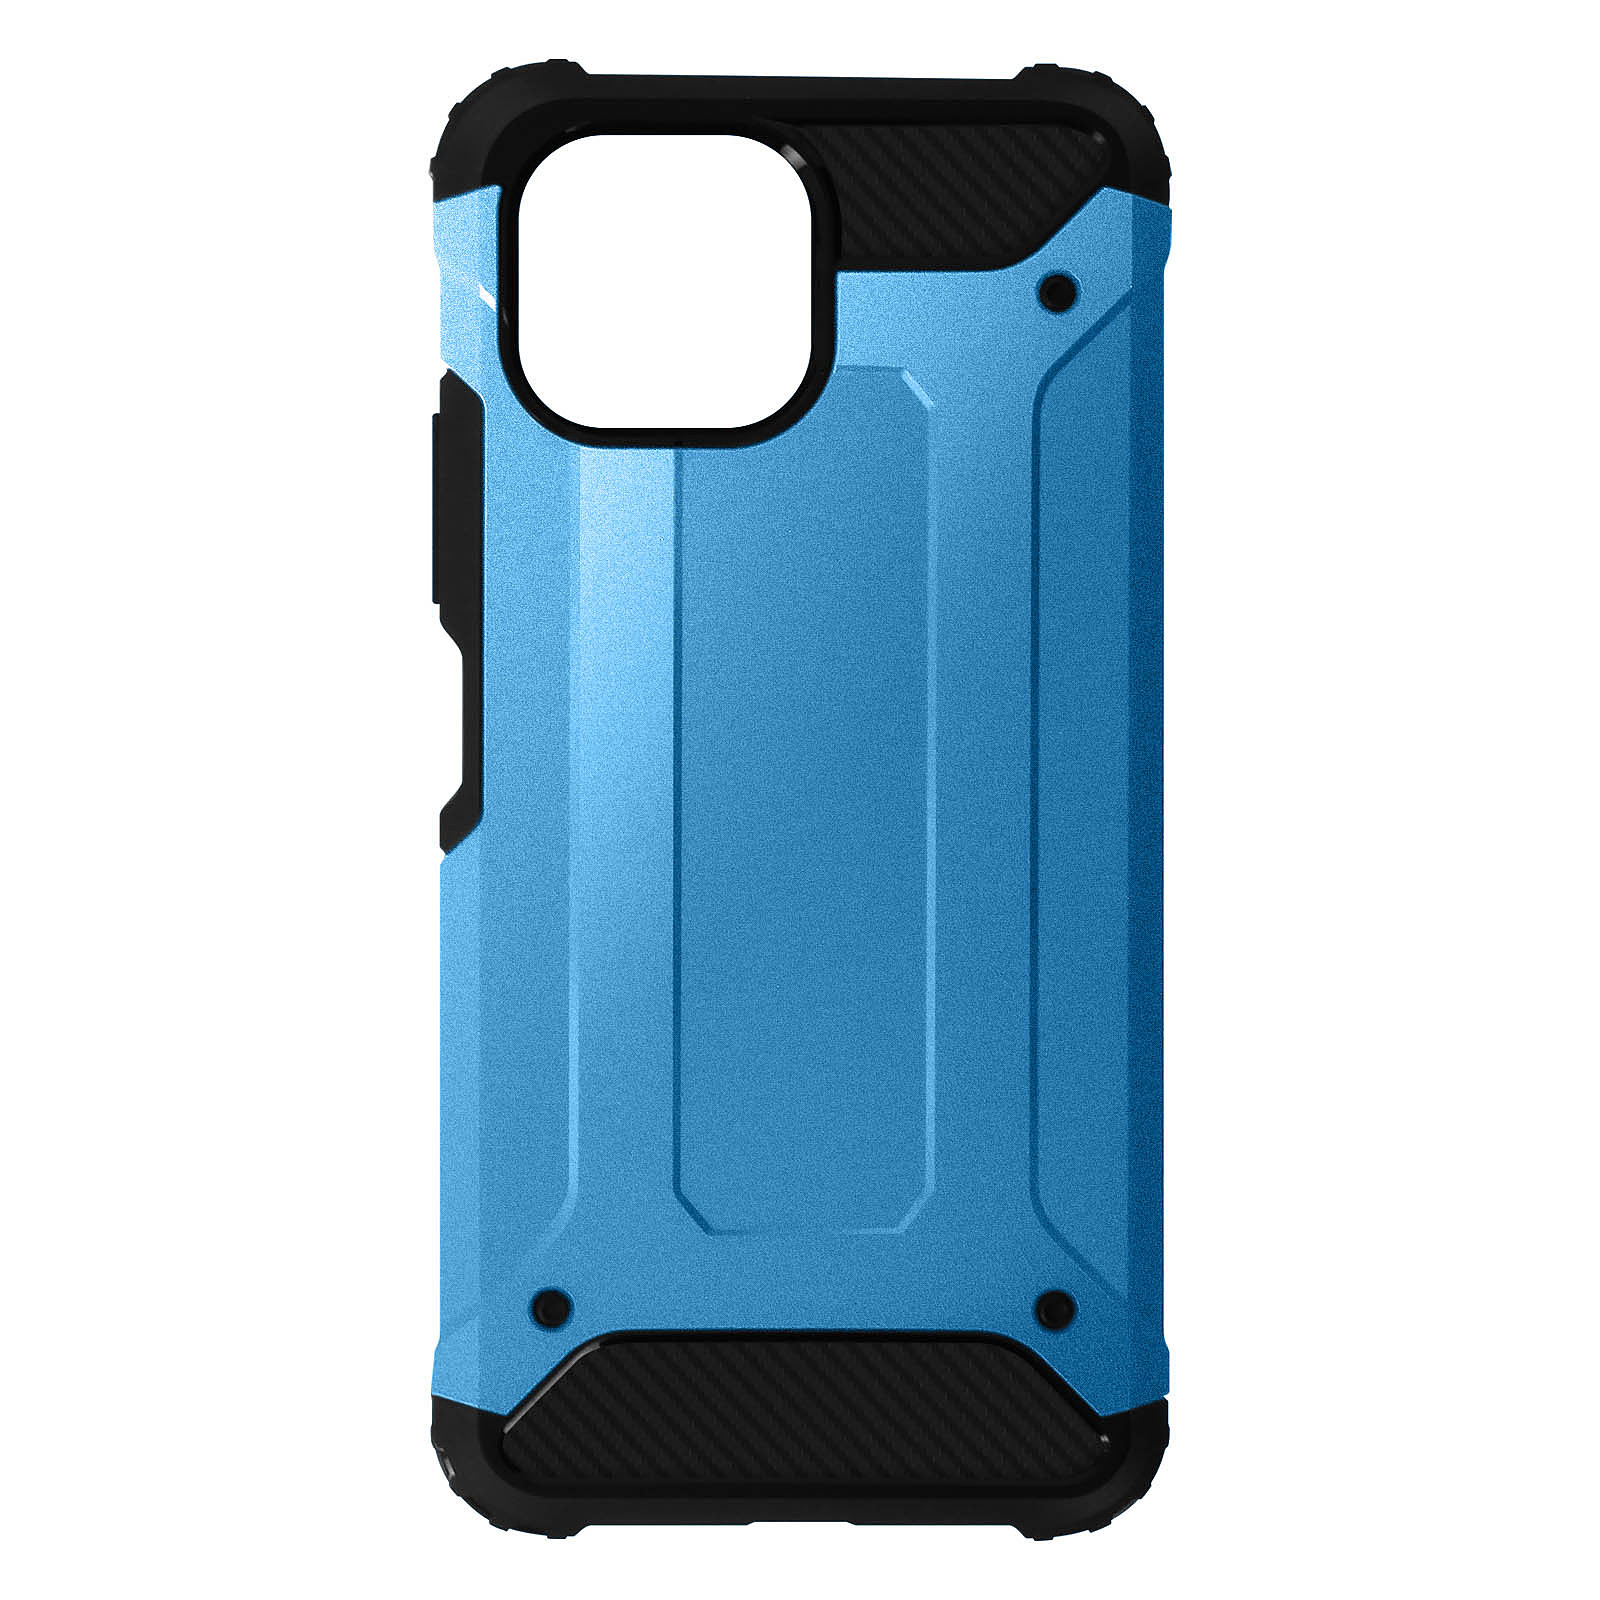 Avizar Coque pour Xiaomi Mi 11 Lite Design Relief Antichoc Serie Defender II Bleu - Coque telephone Avizar